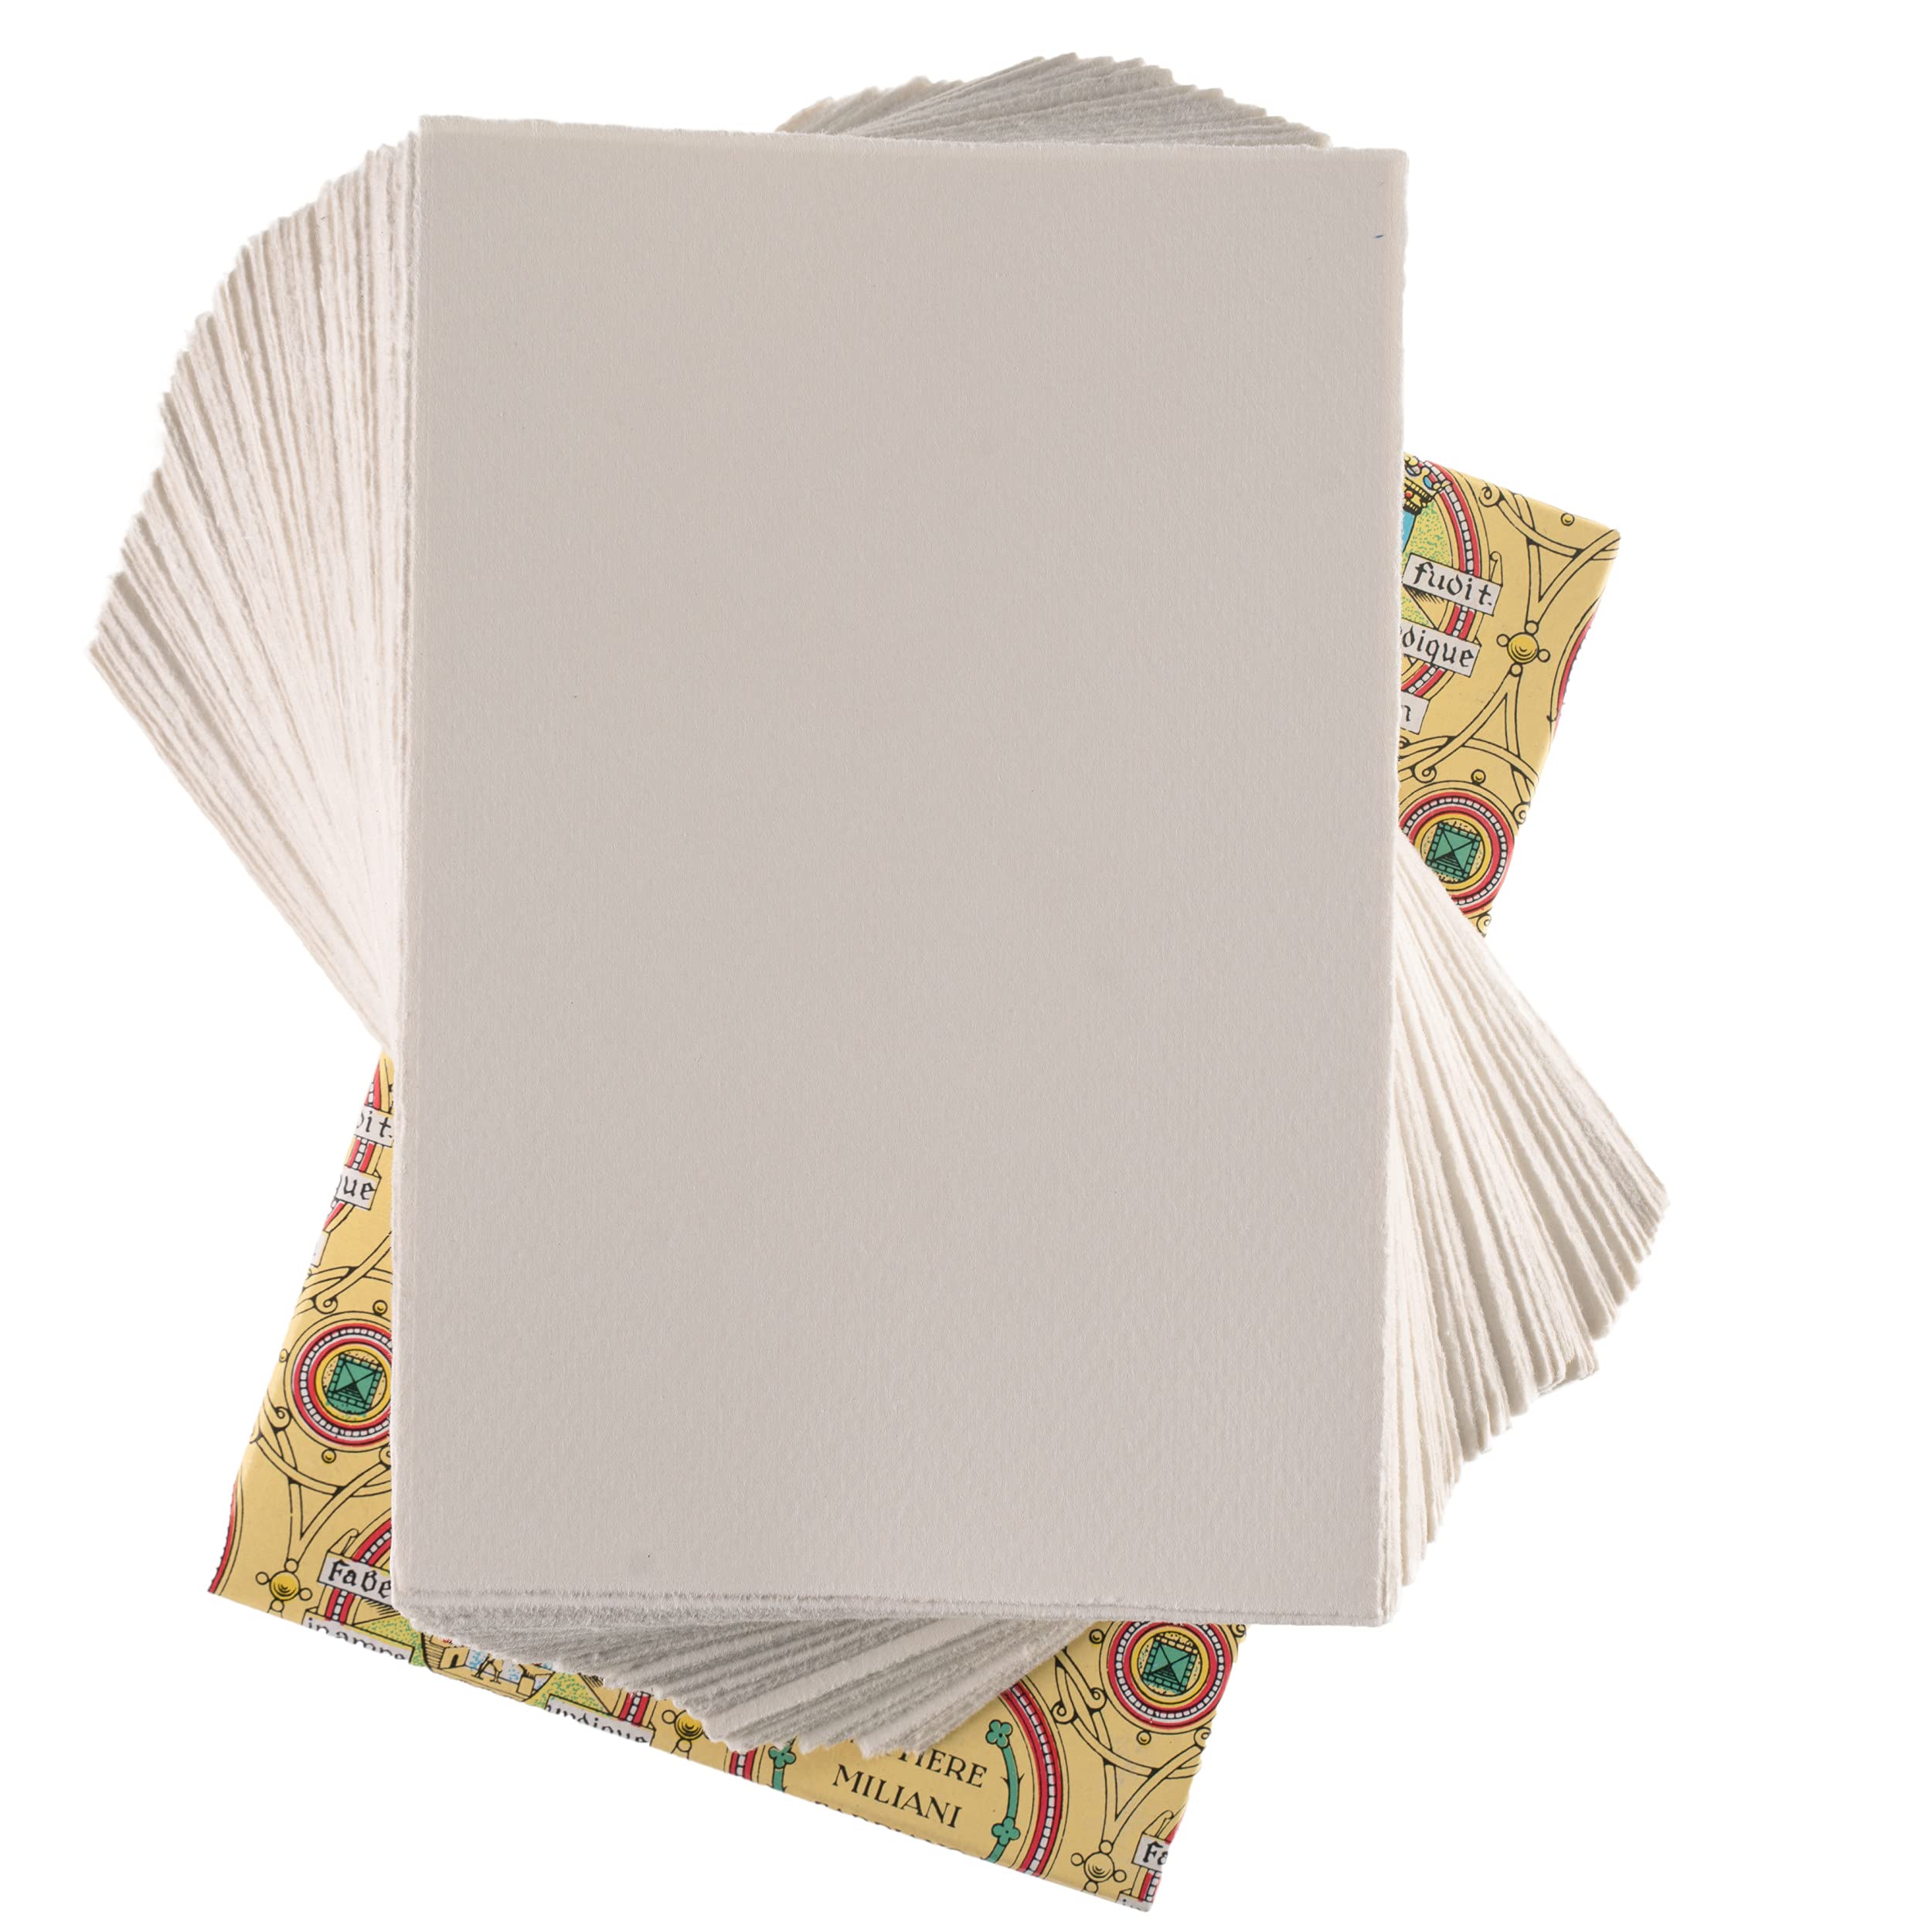 Fabriano Medioevalis Single Flat Cards / Medium